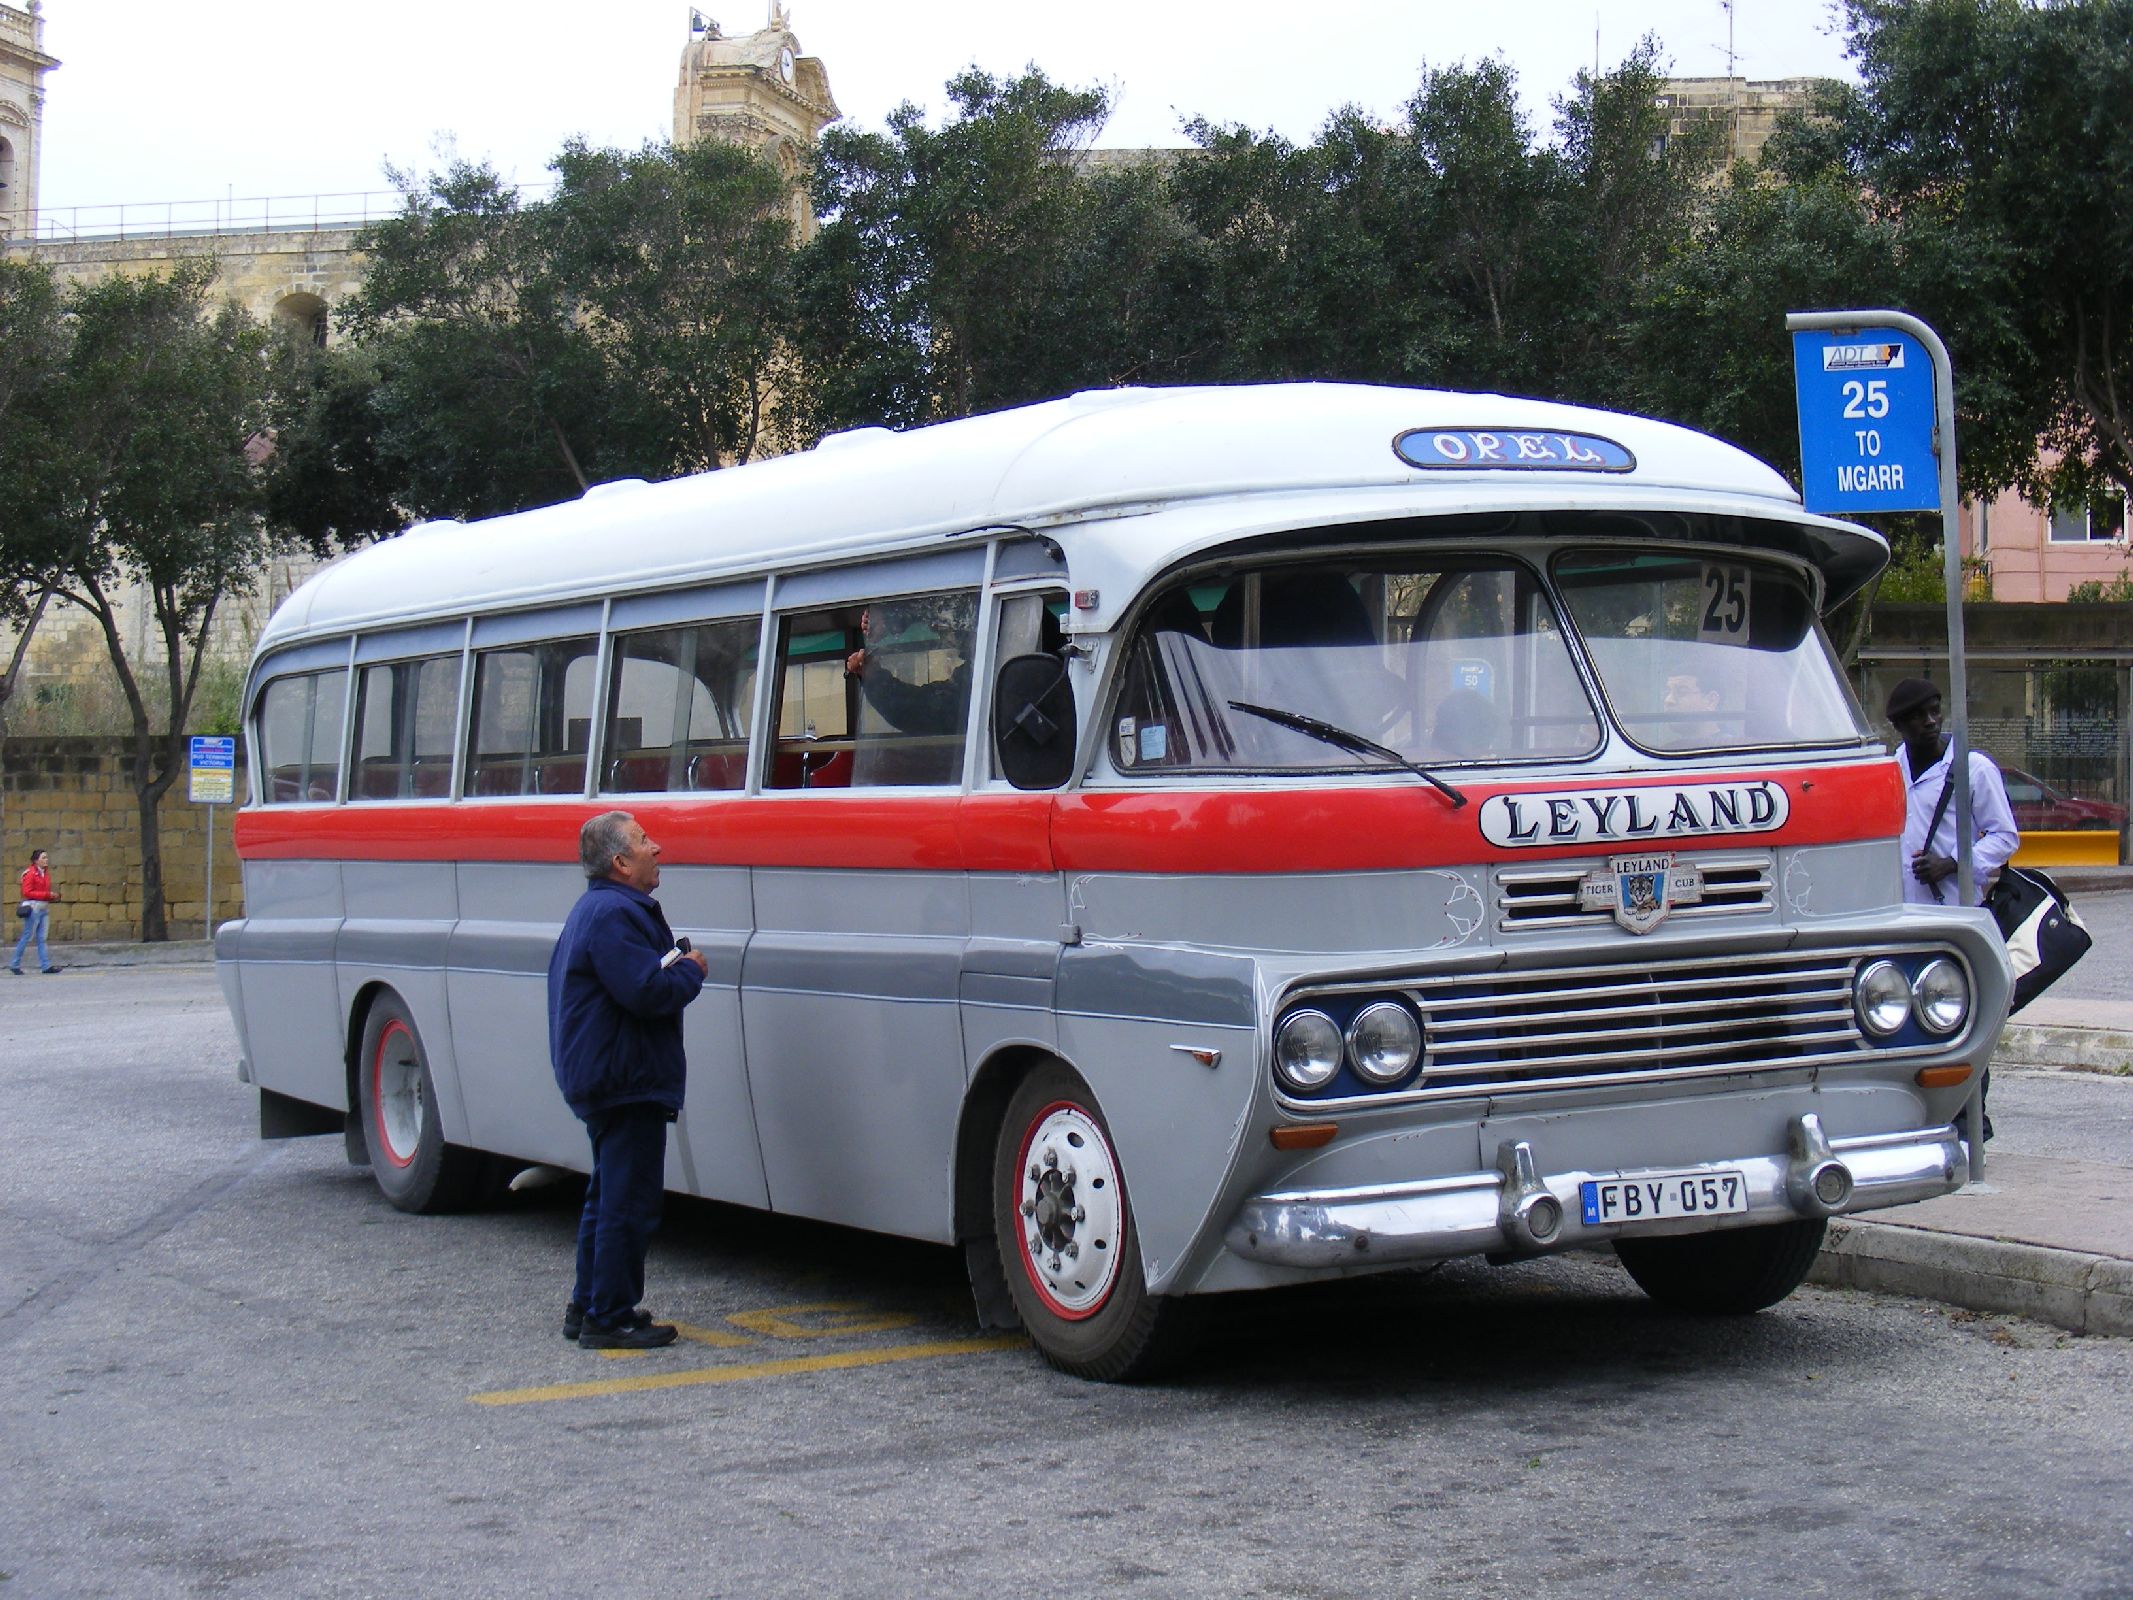 File:FBY057 Leyland bus, Victoria - Rabat, Gozo. - Flickr ...